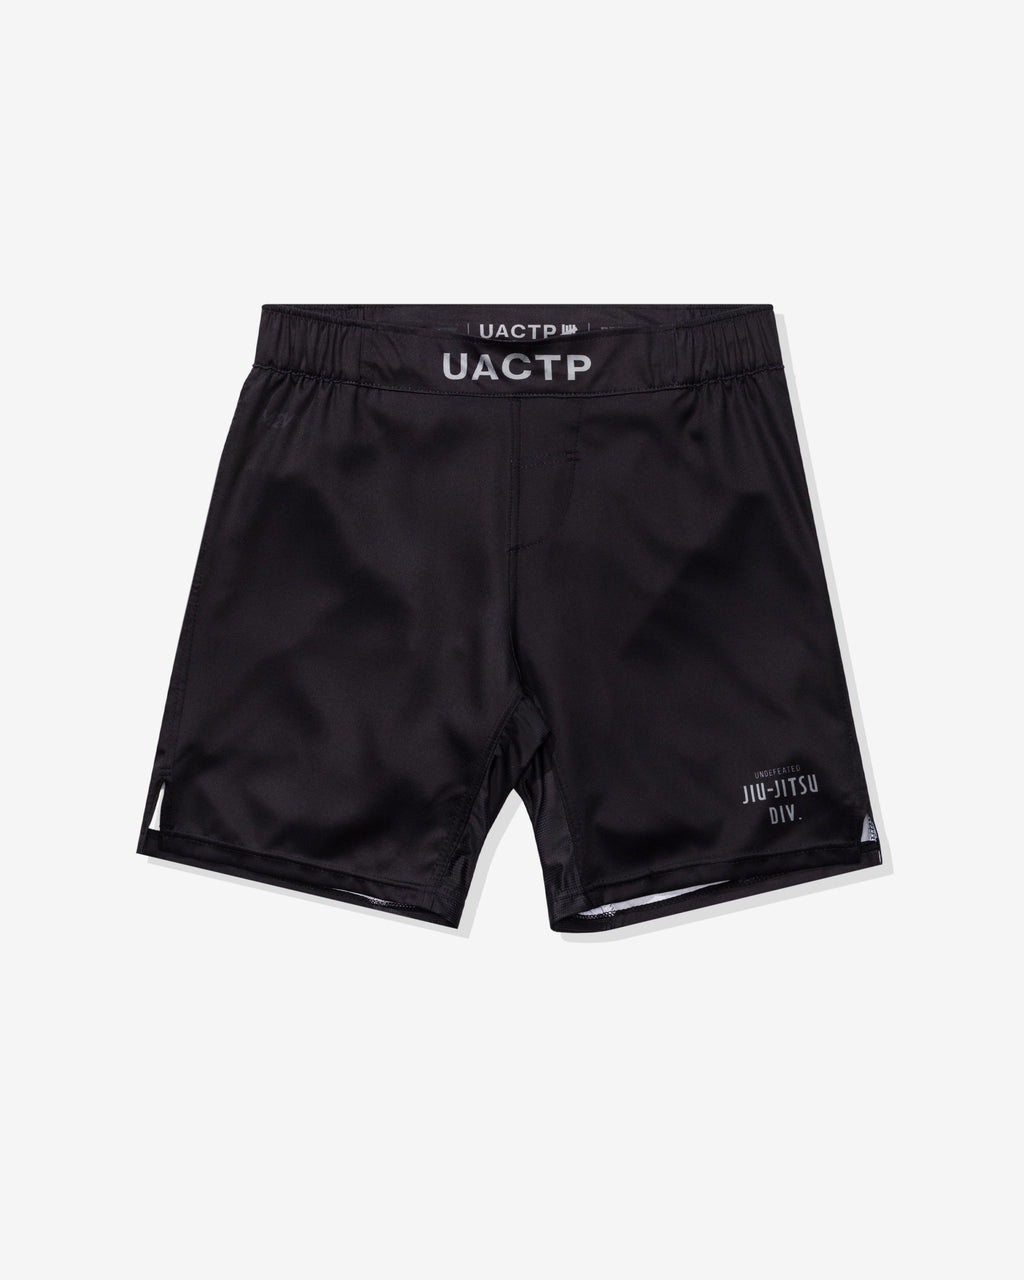 Shorts – Undefeated